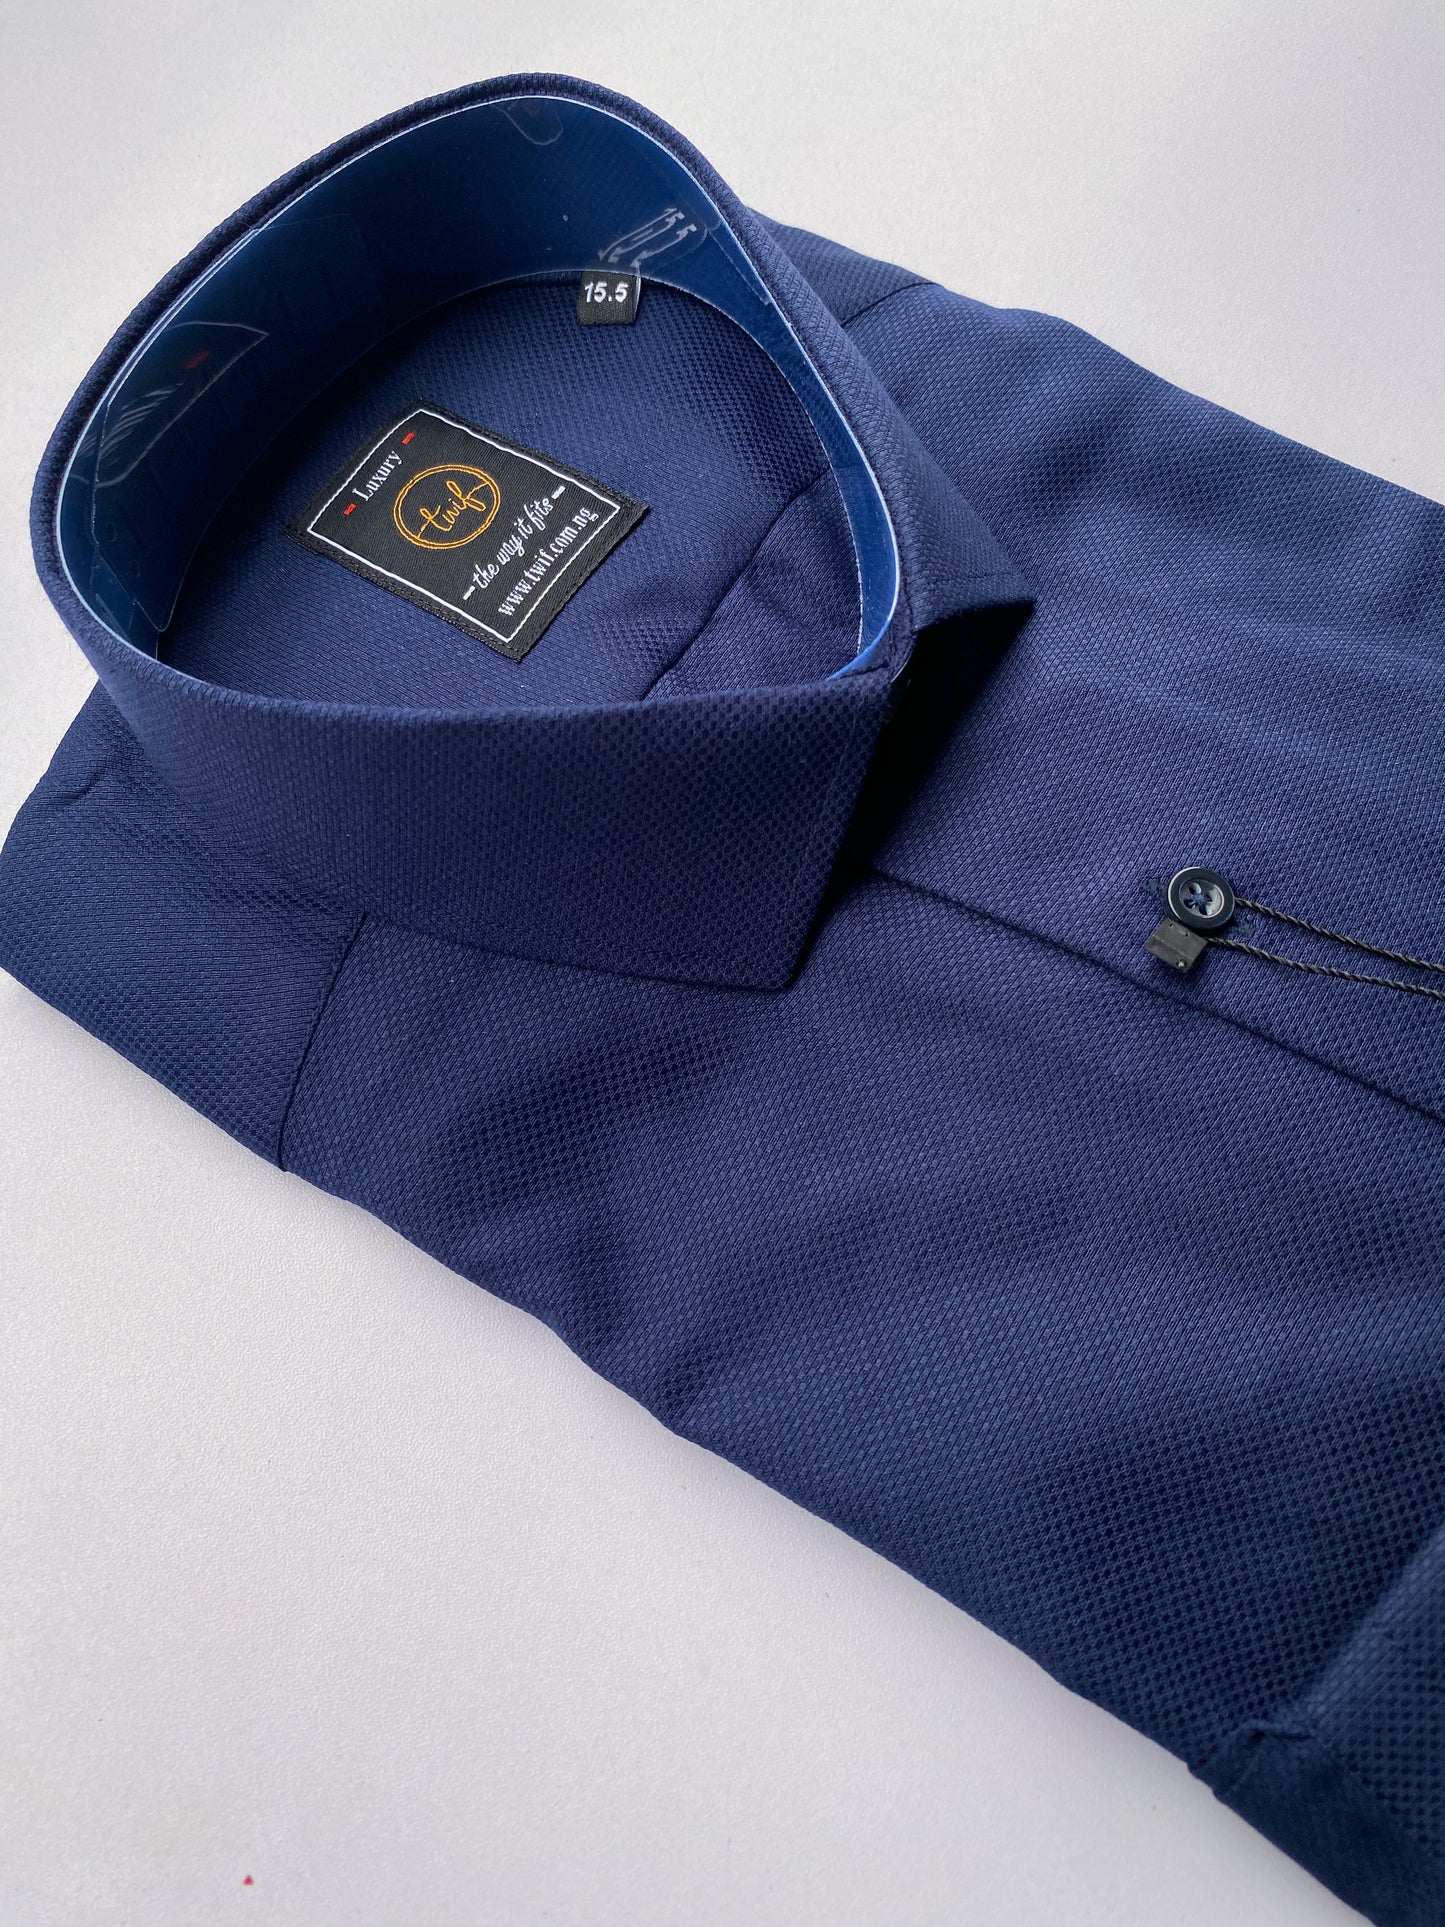 Navy blue oxford shirt